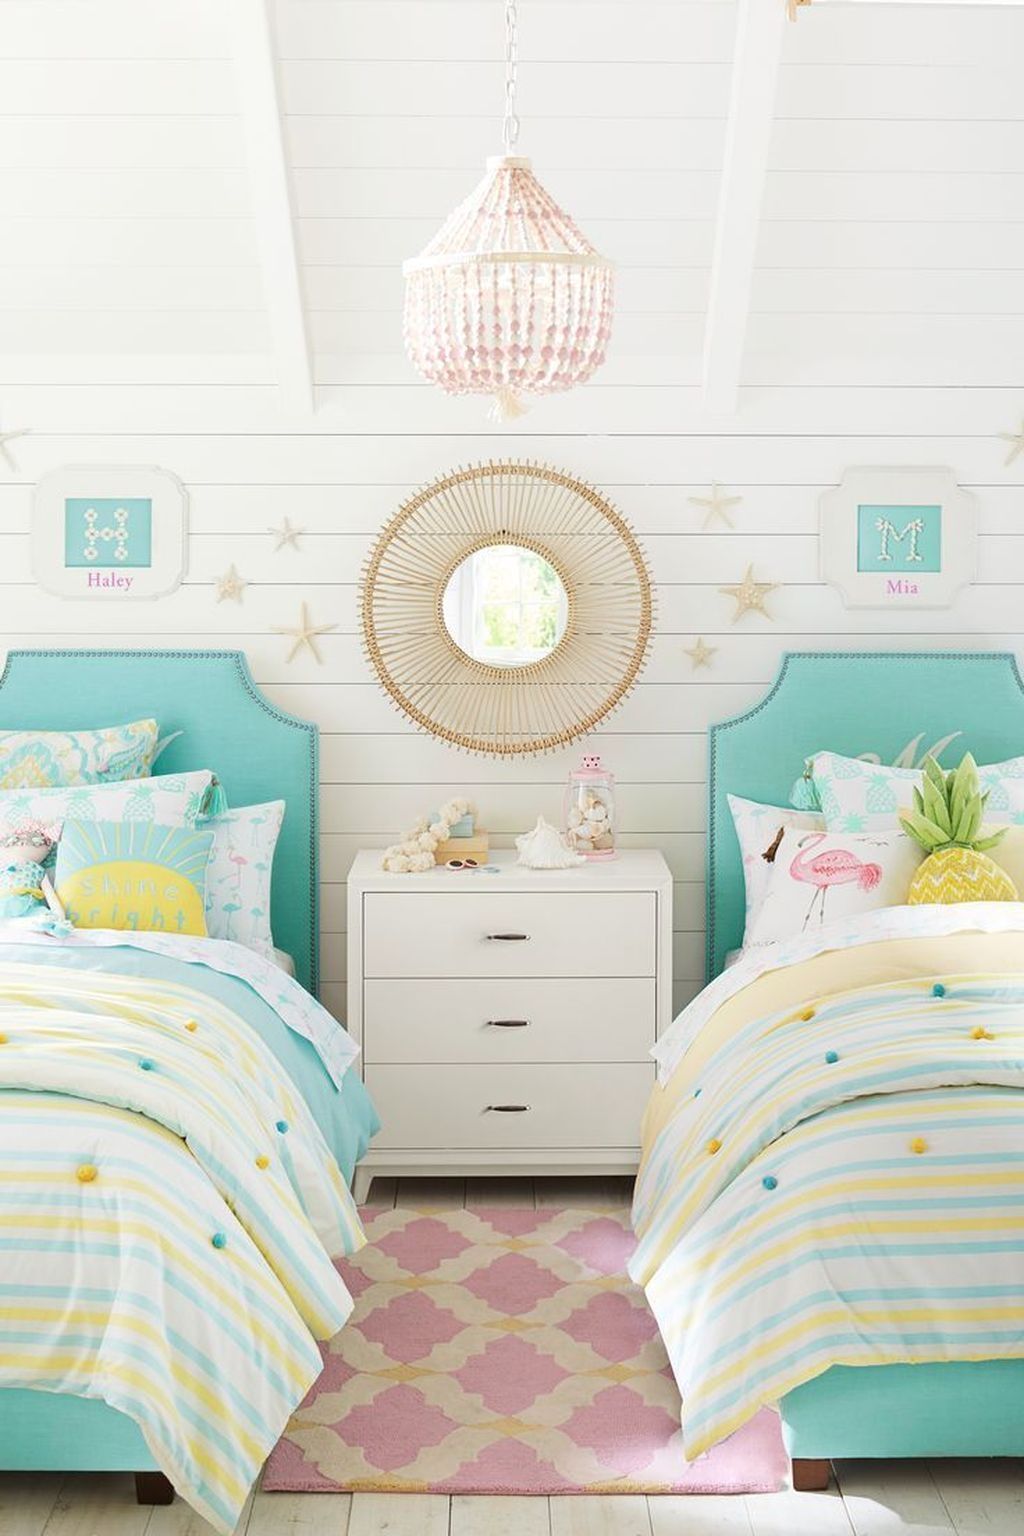 Tropical Bedroom In Pastel Pink